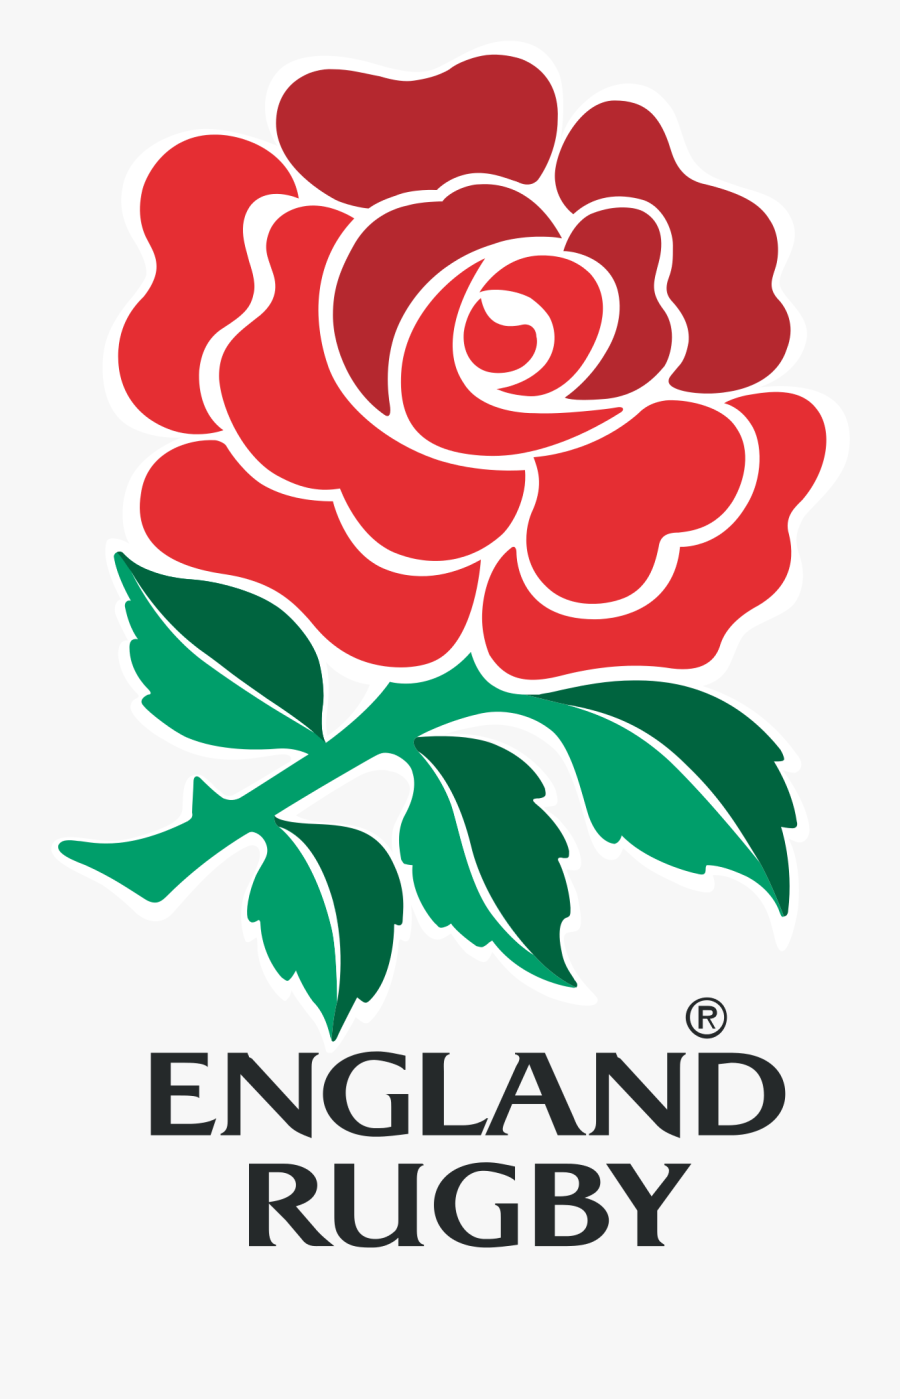 Football Field Ruler Clipart - England Rugby Team Logo, Transparent Clipart